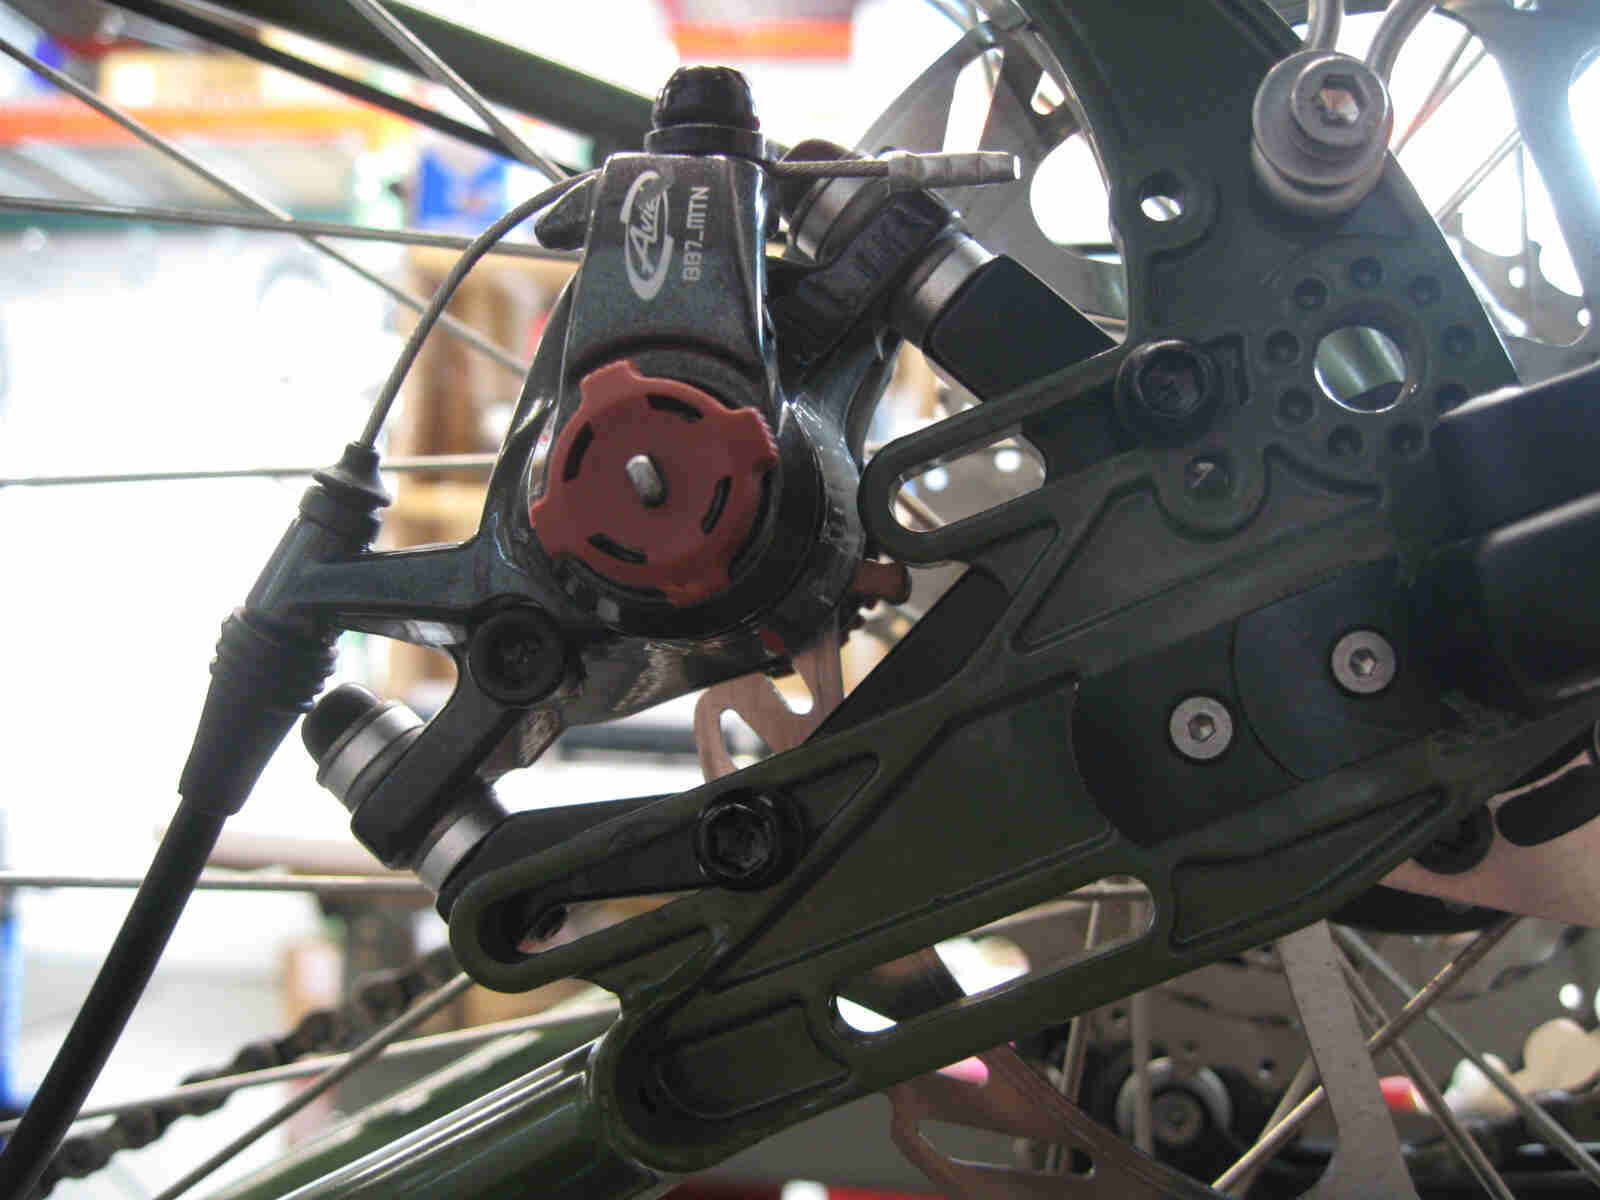 Surly Ogre bike - green - rear disc brake caliper detail - left side, close up view